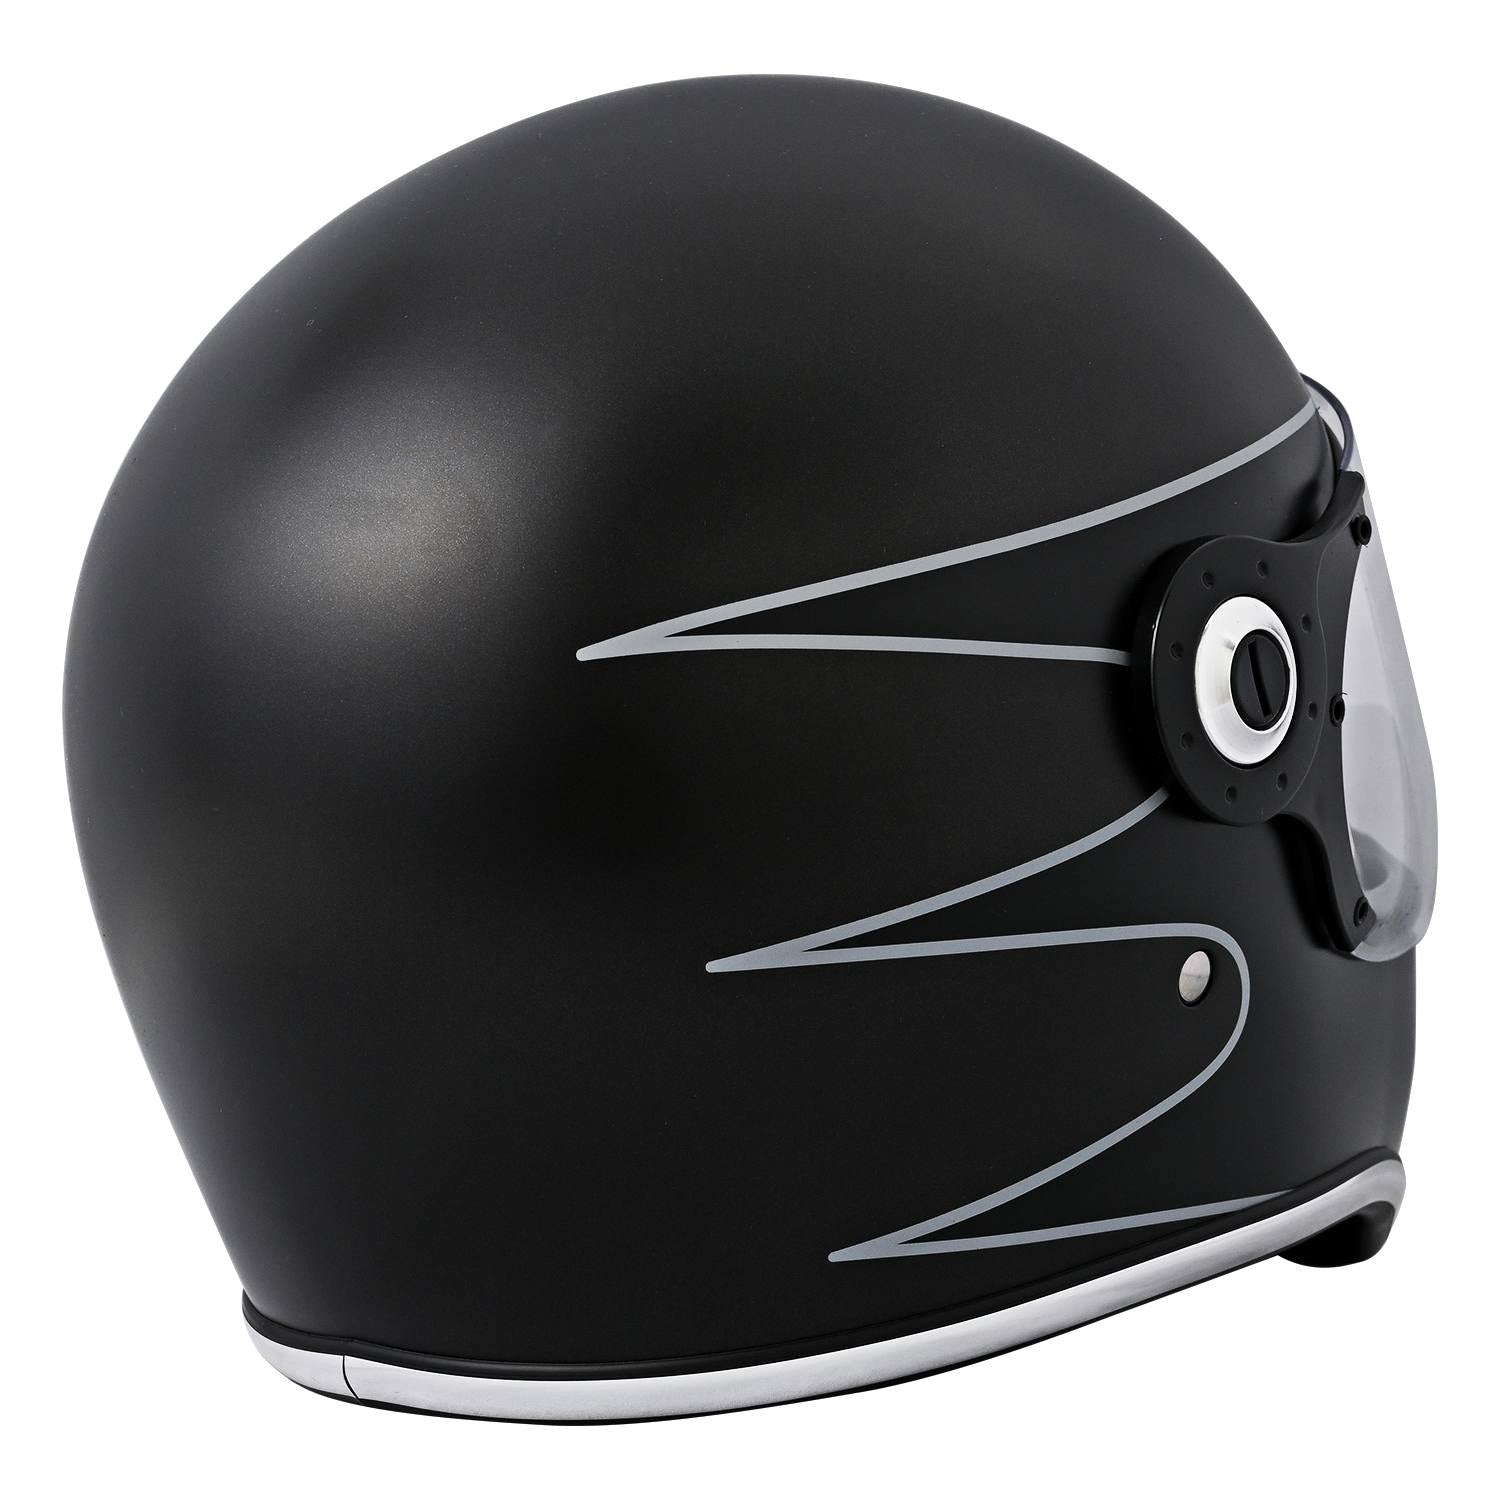 RIDEZ X HELMET Limited Quantity Model SCALLOP Full Face Motorcycle Helmet 